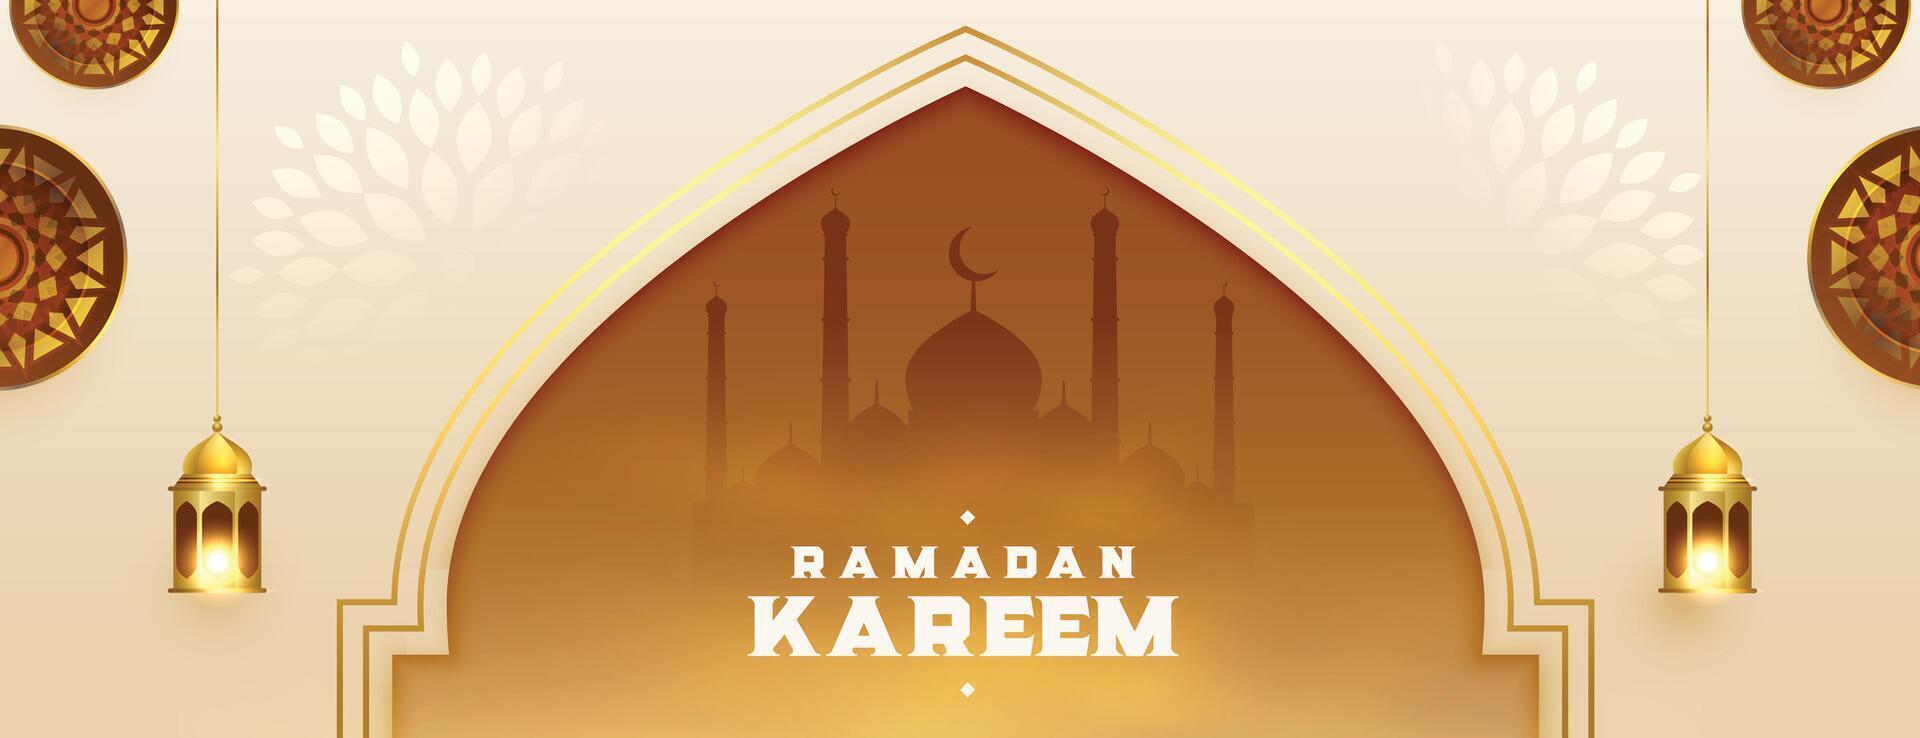 árabe Ramadã kareem muçulmano festival bandeira Projeto vetor